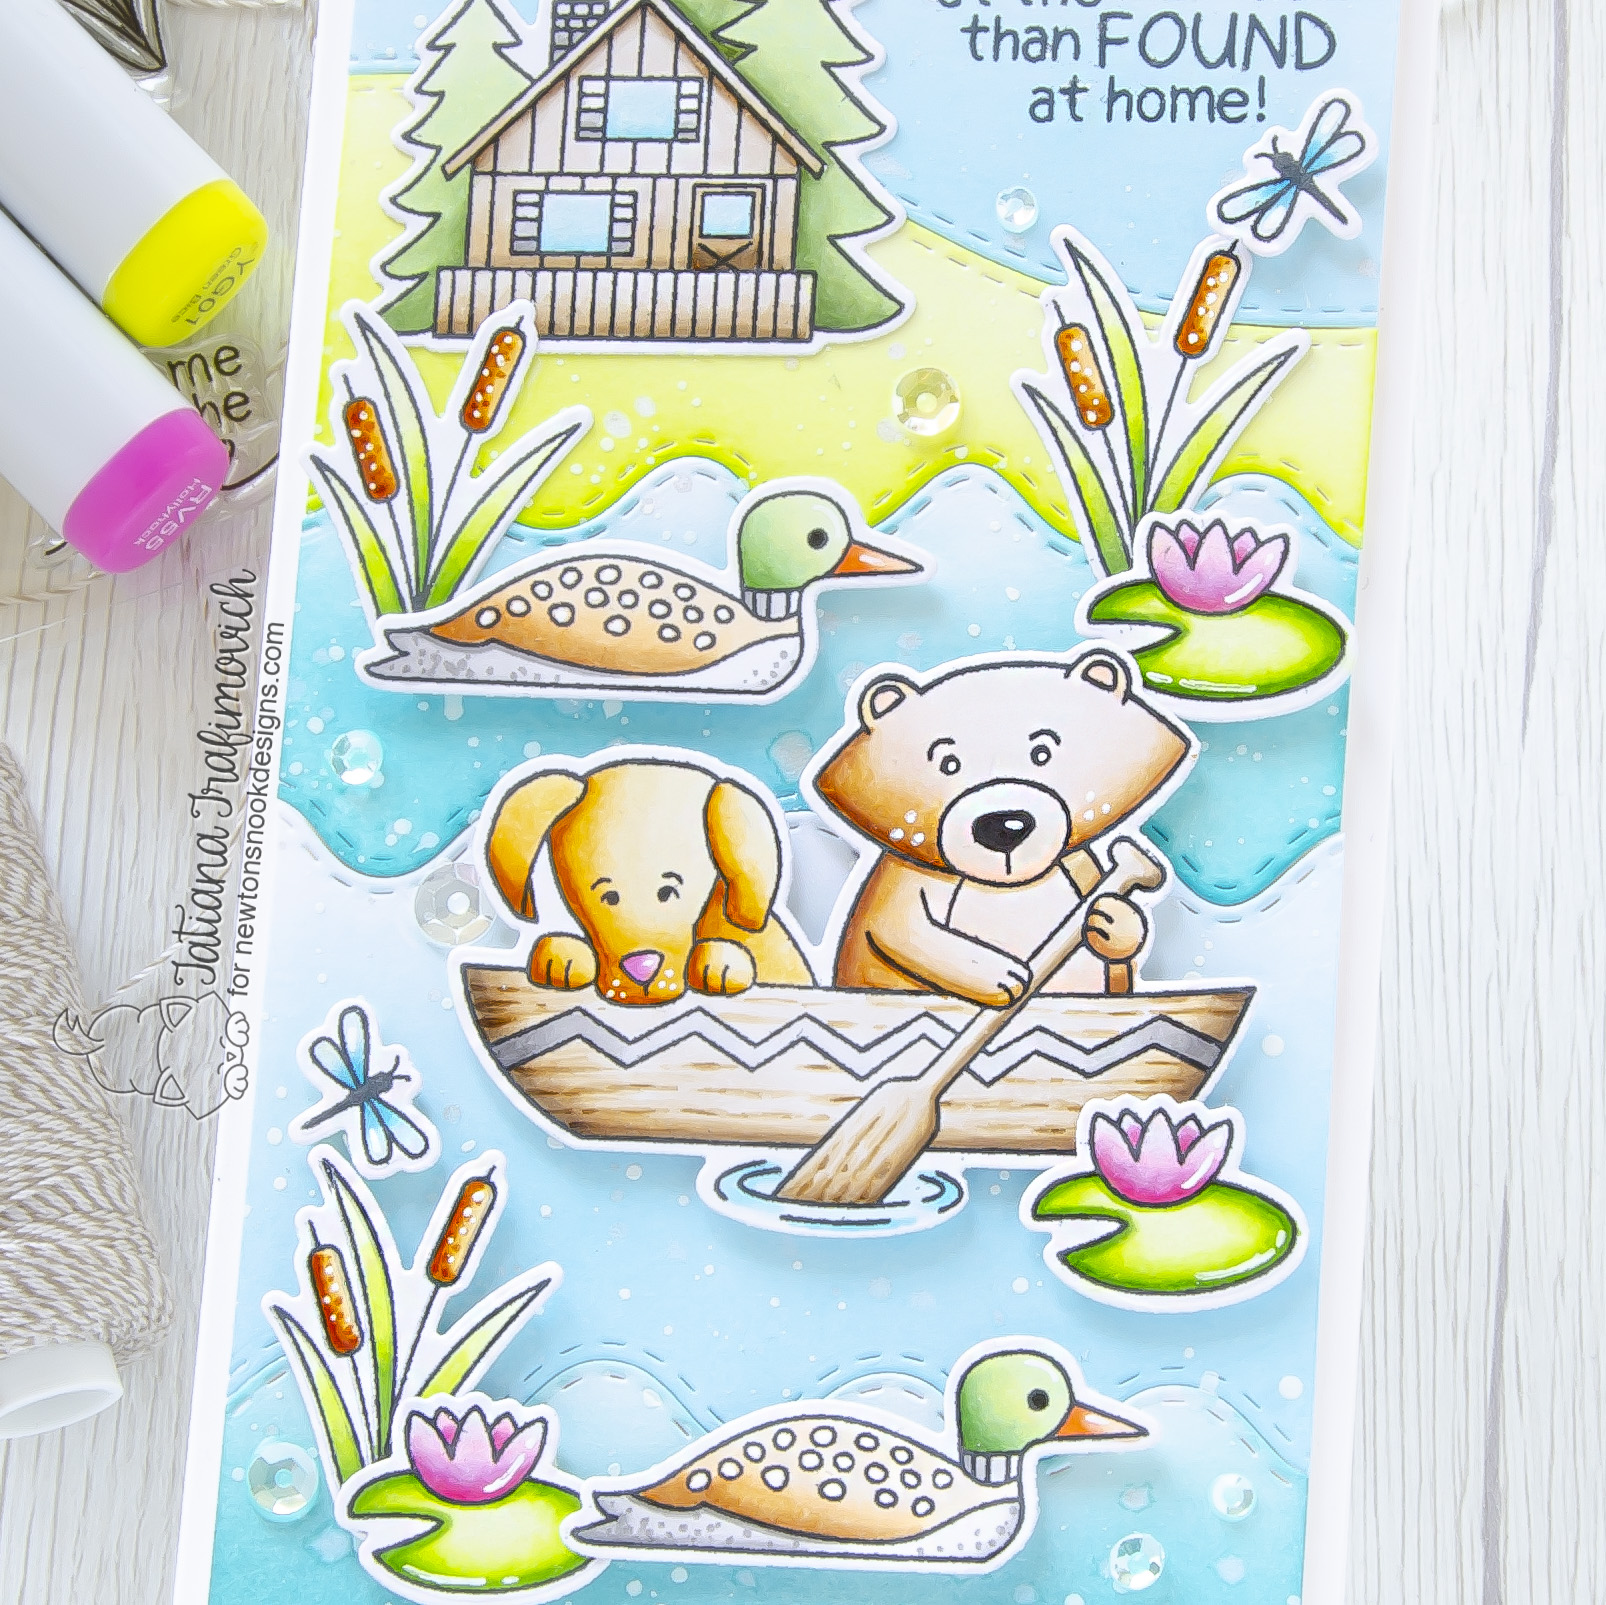 I'd Rather Be Lost At The Lake... #handmade card by Tatiana Trafimovich #tatianacraftandart - Winston's Lake House stamp set by Newton's Nook Designs #newtonsnook